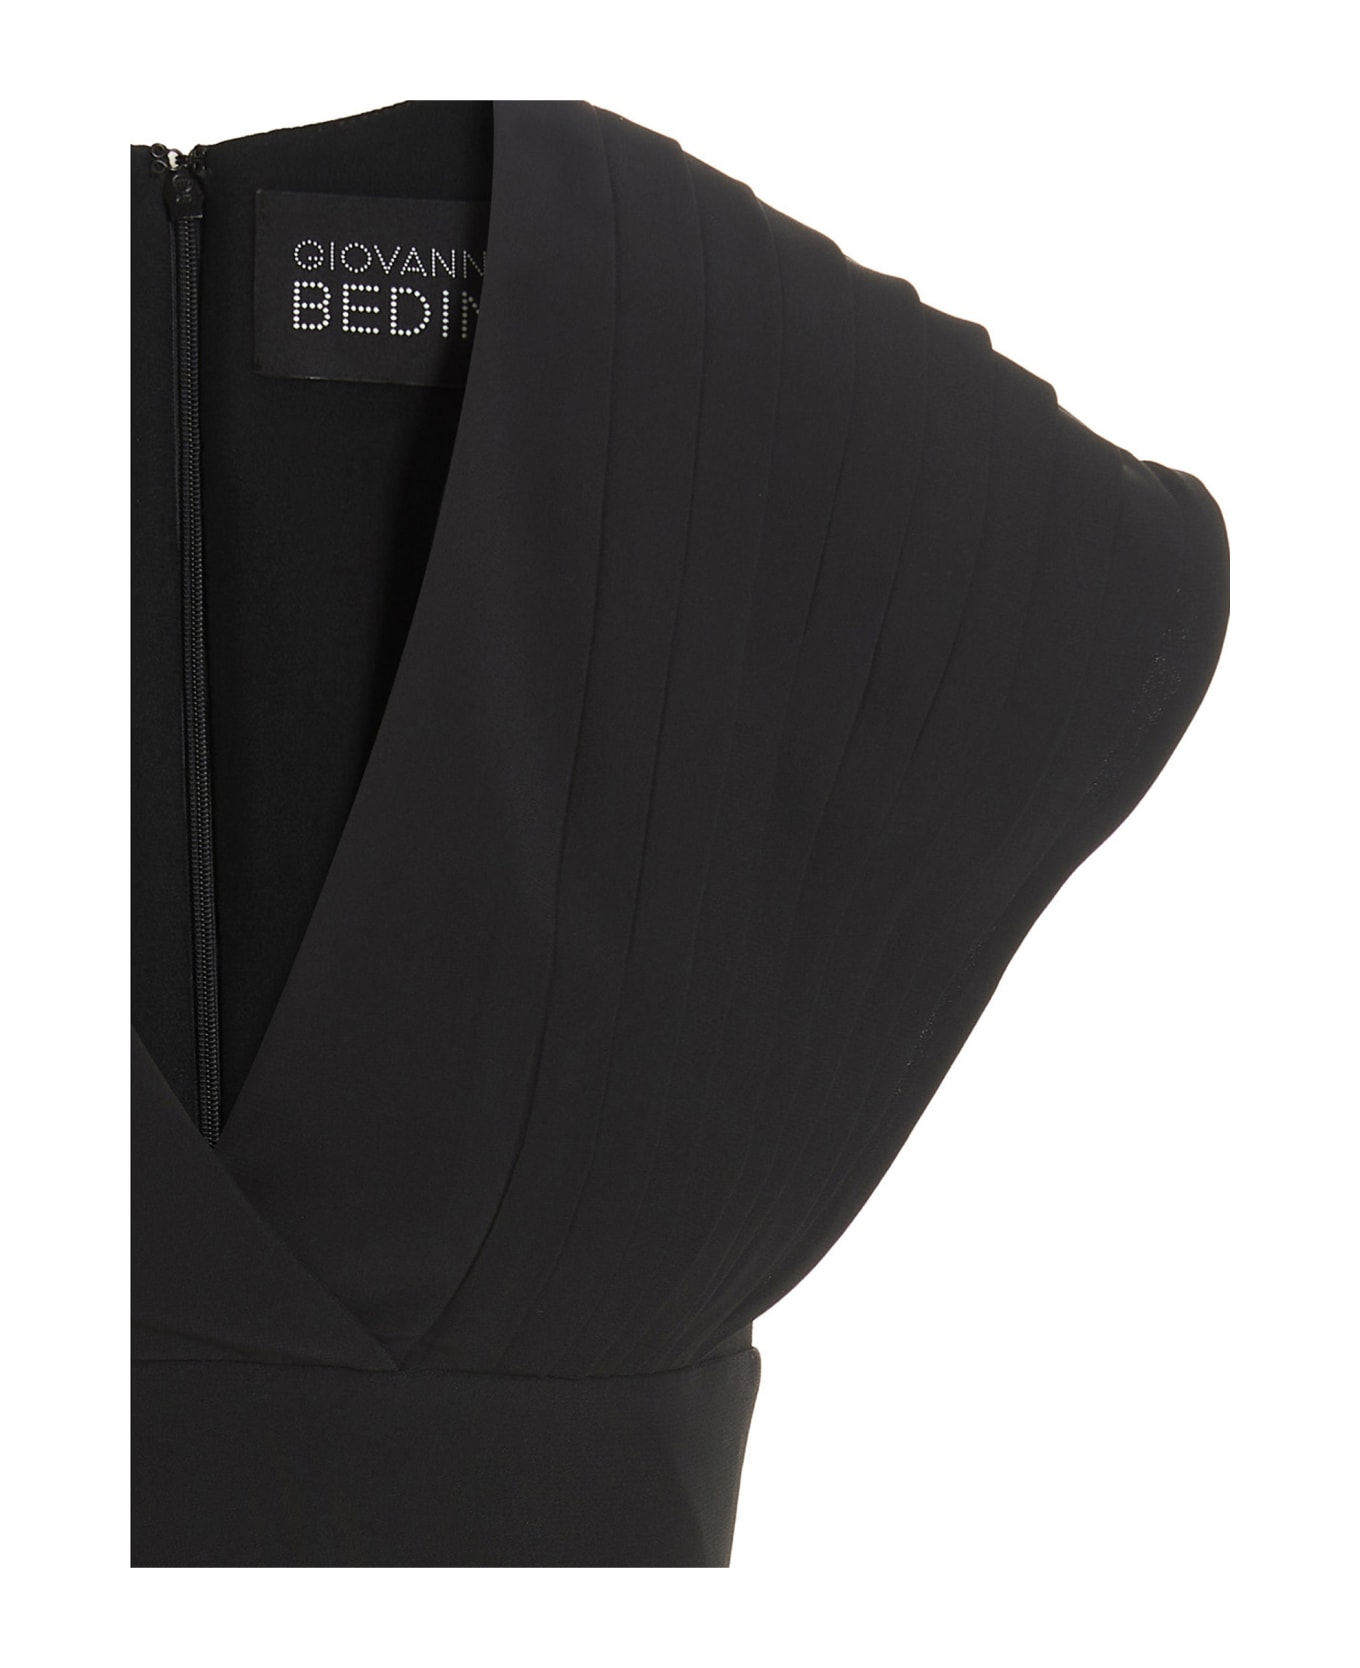 Giovanni Bedin Plisse Detail Mini Dress - Black   ワンピース＆ドレス